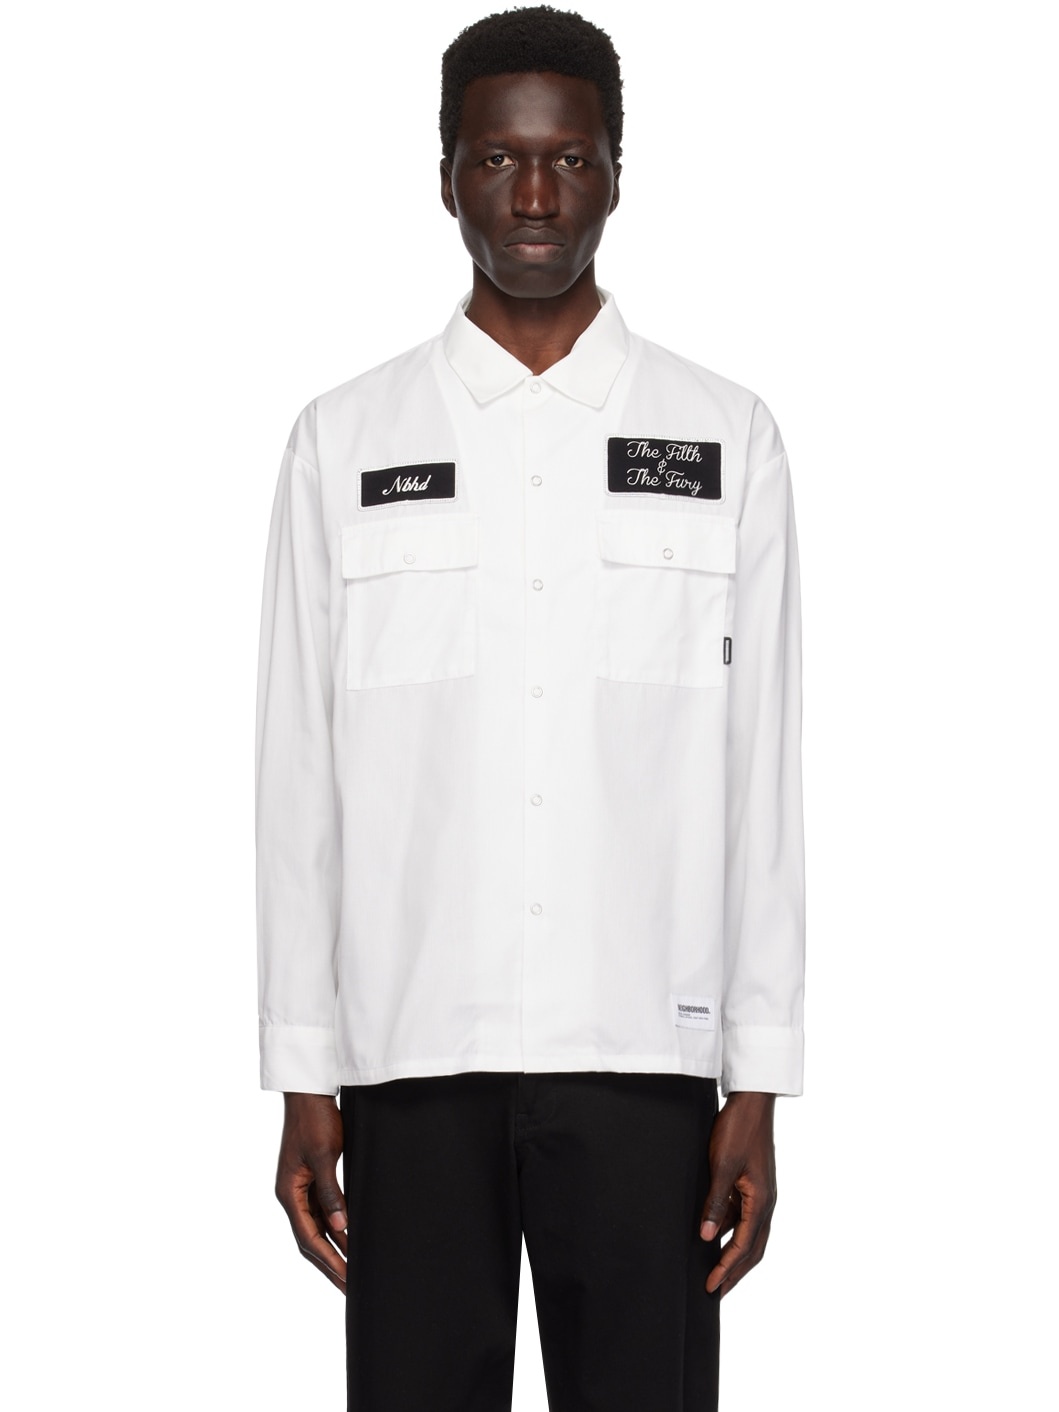 White Striped Shirt - 1